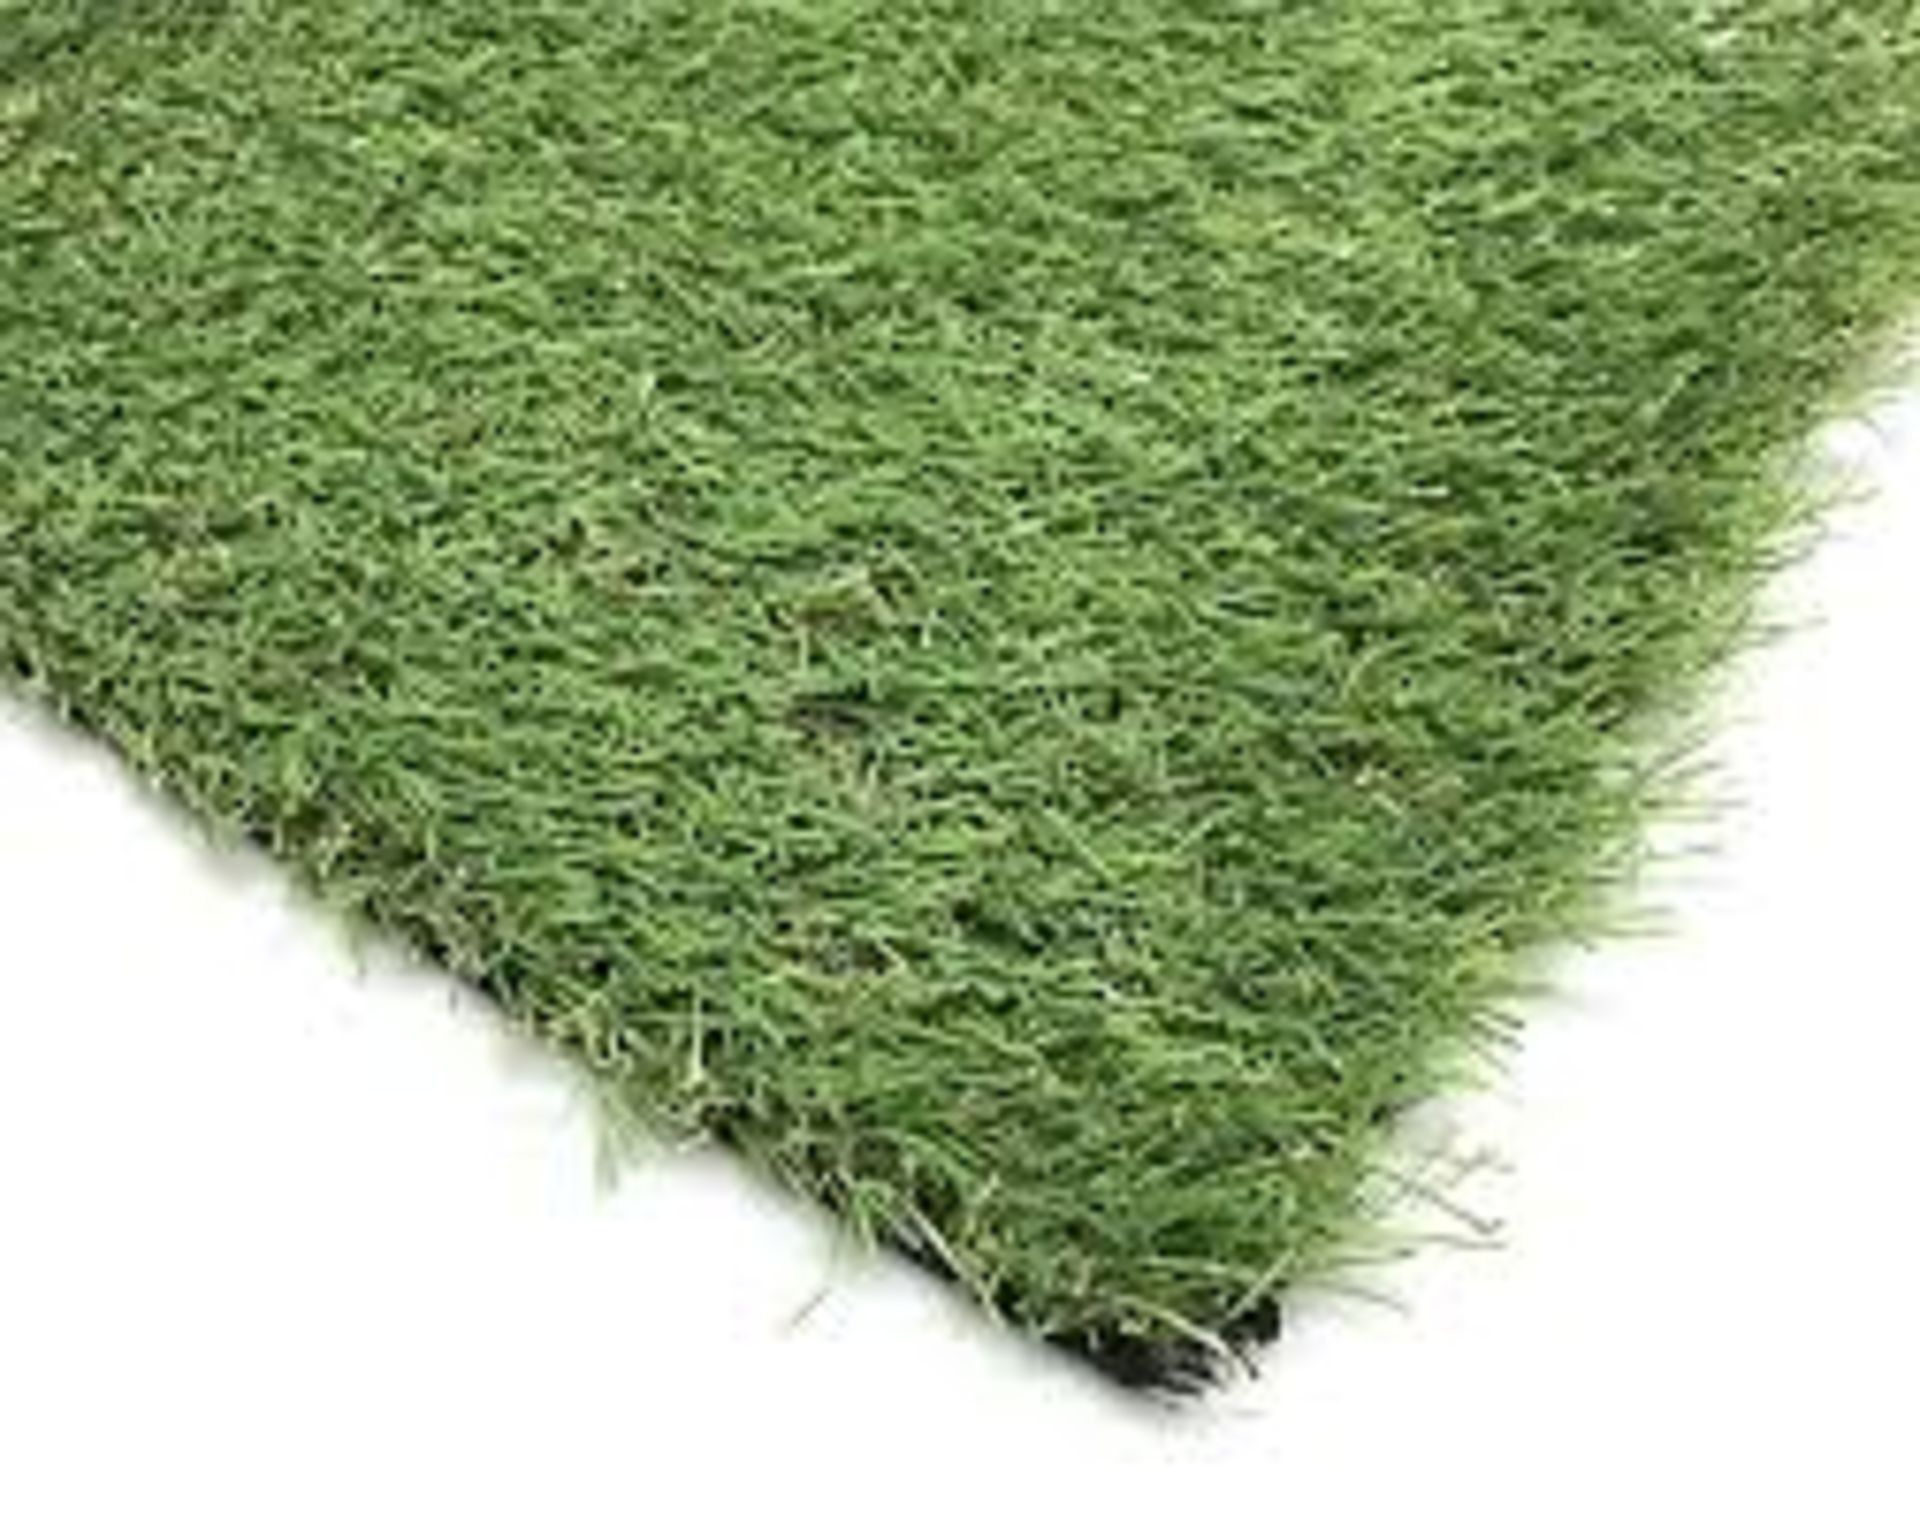 Dennis Medium density Artificial grass (L)4m (W)1m (T)22mm. - P3.